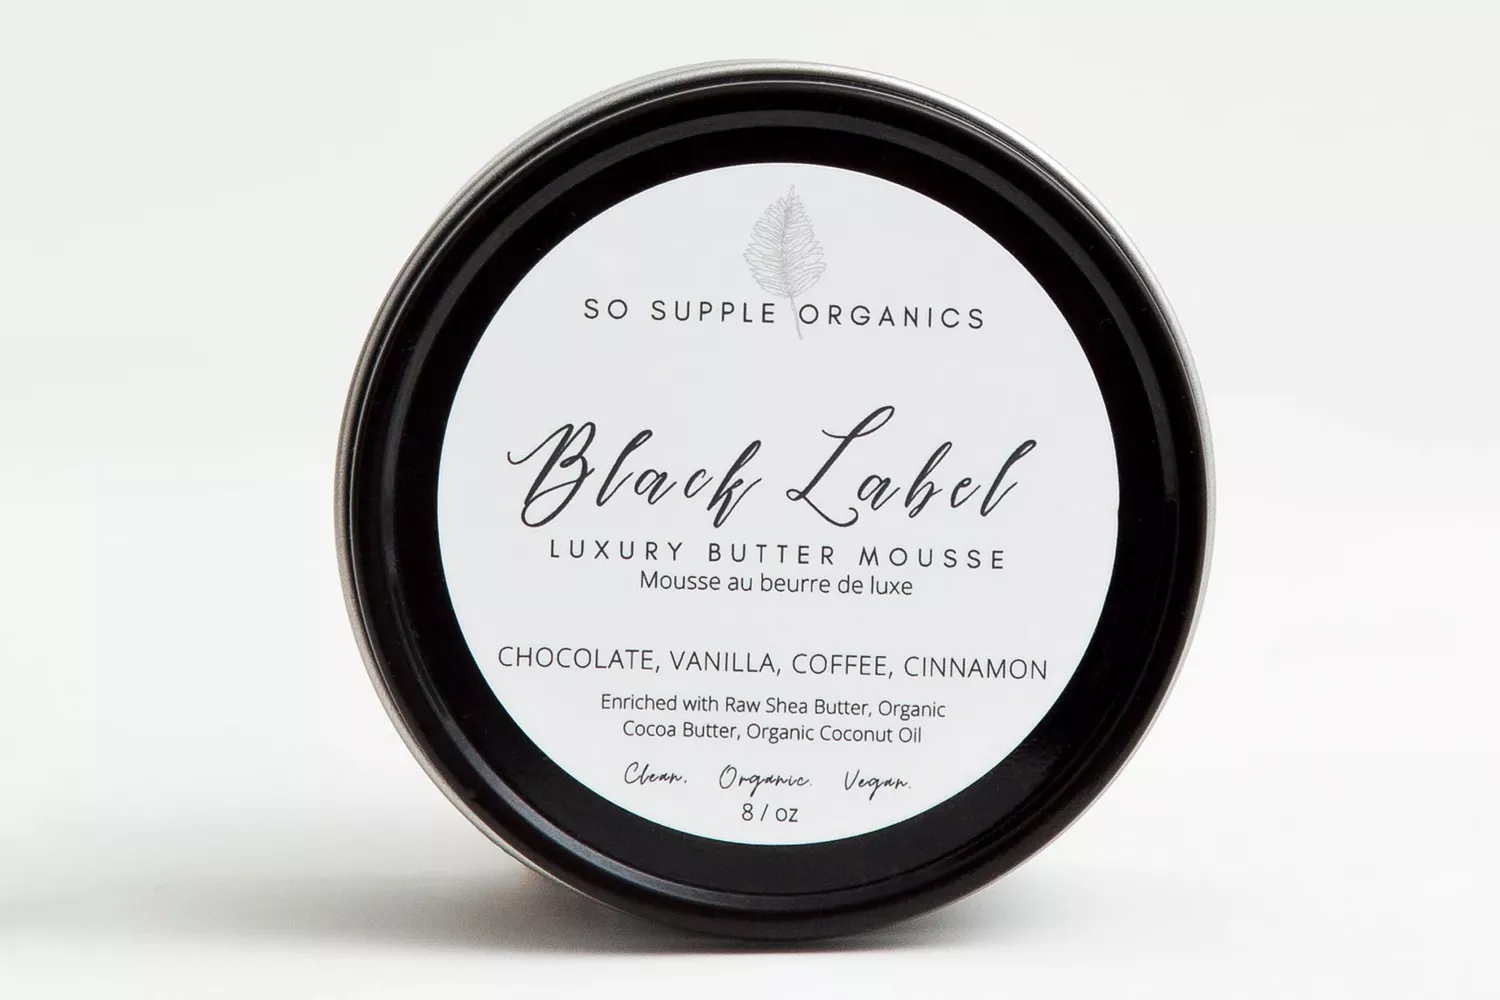 So Supple Organics Black Label Luxury Butter Mousse